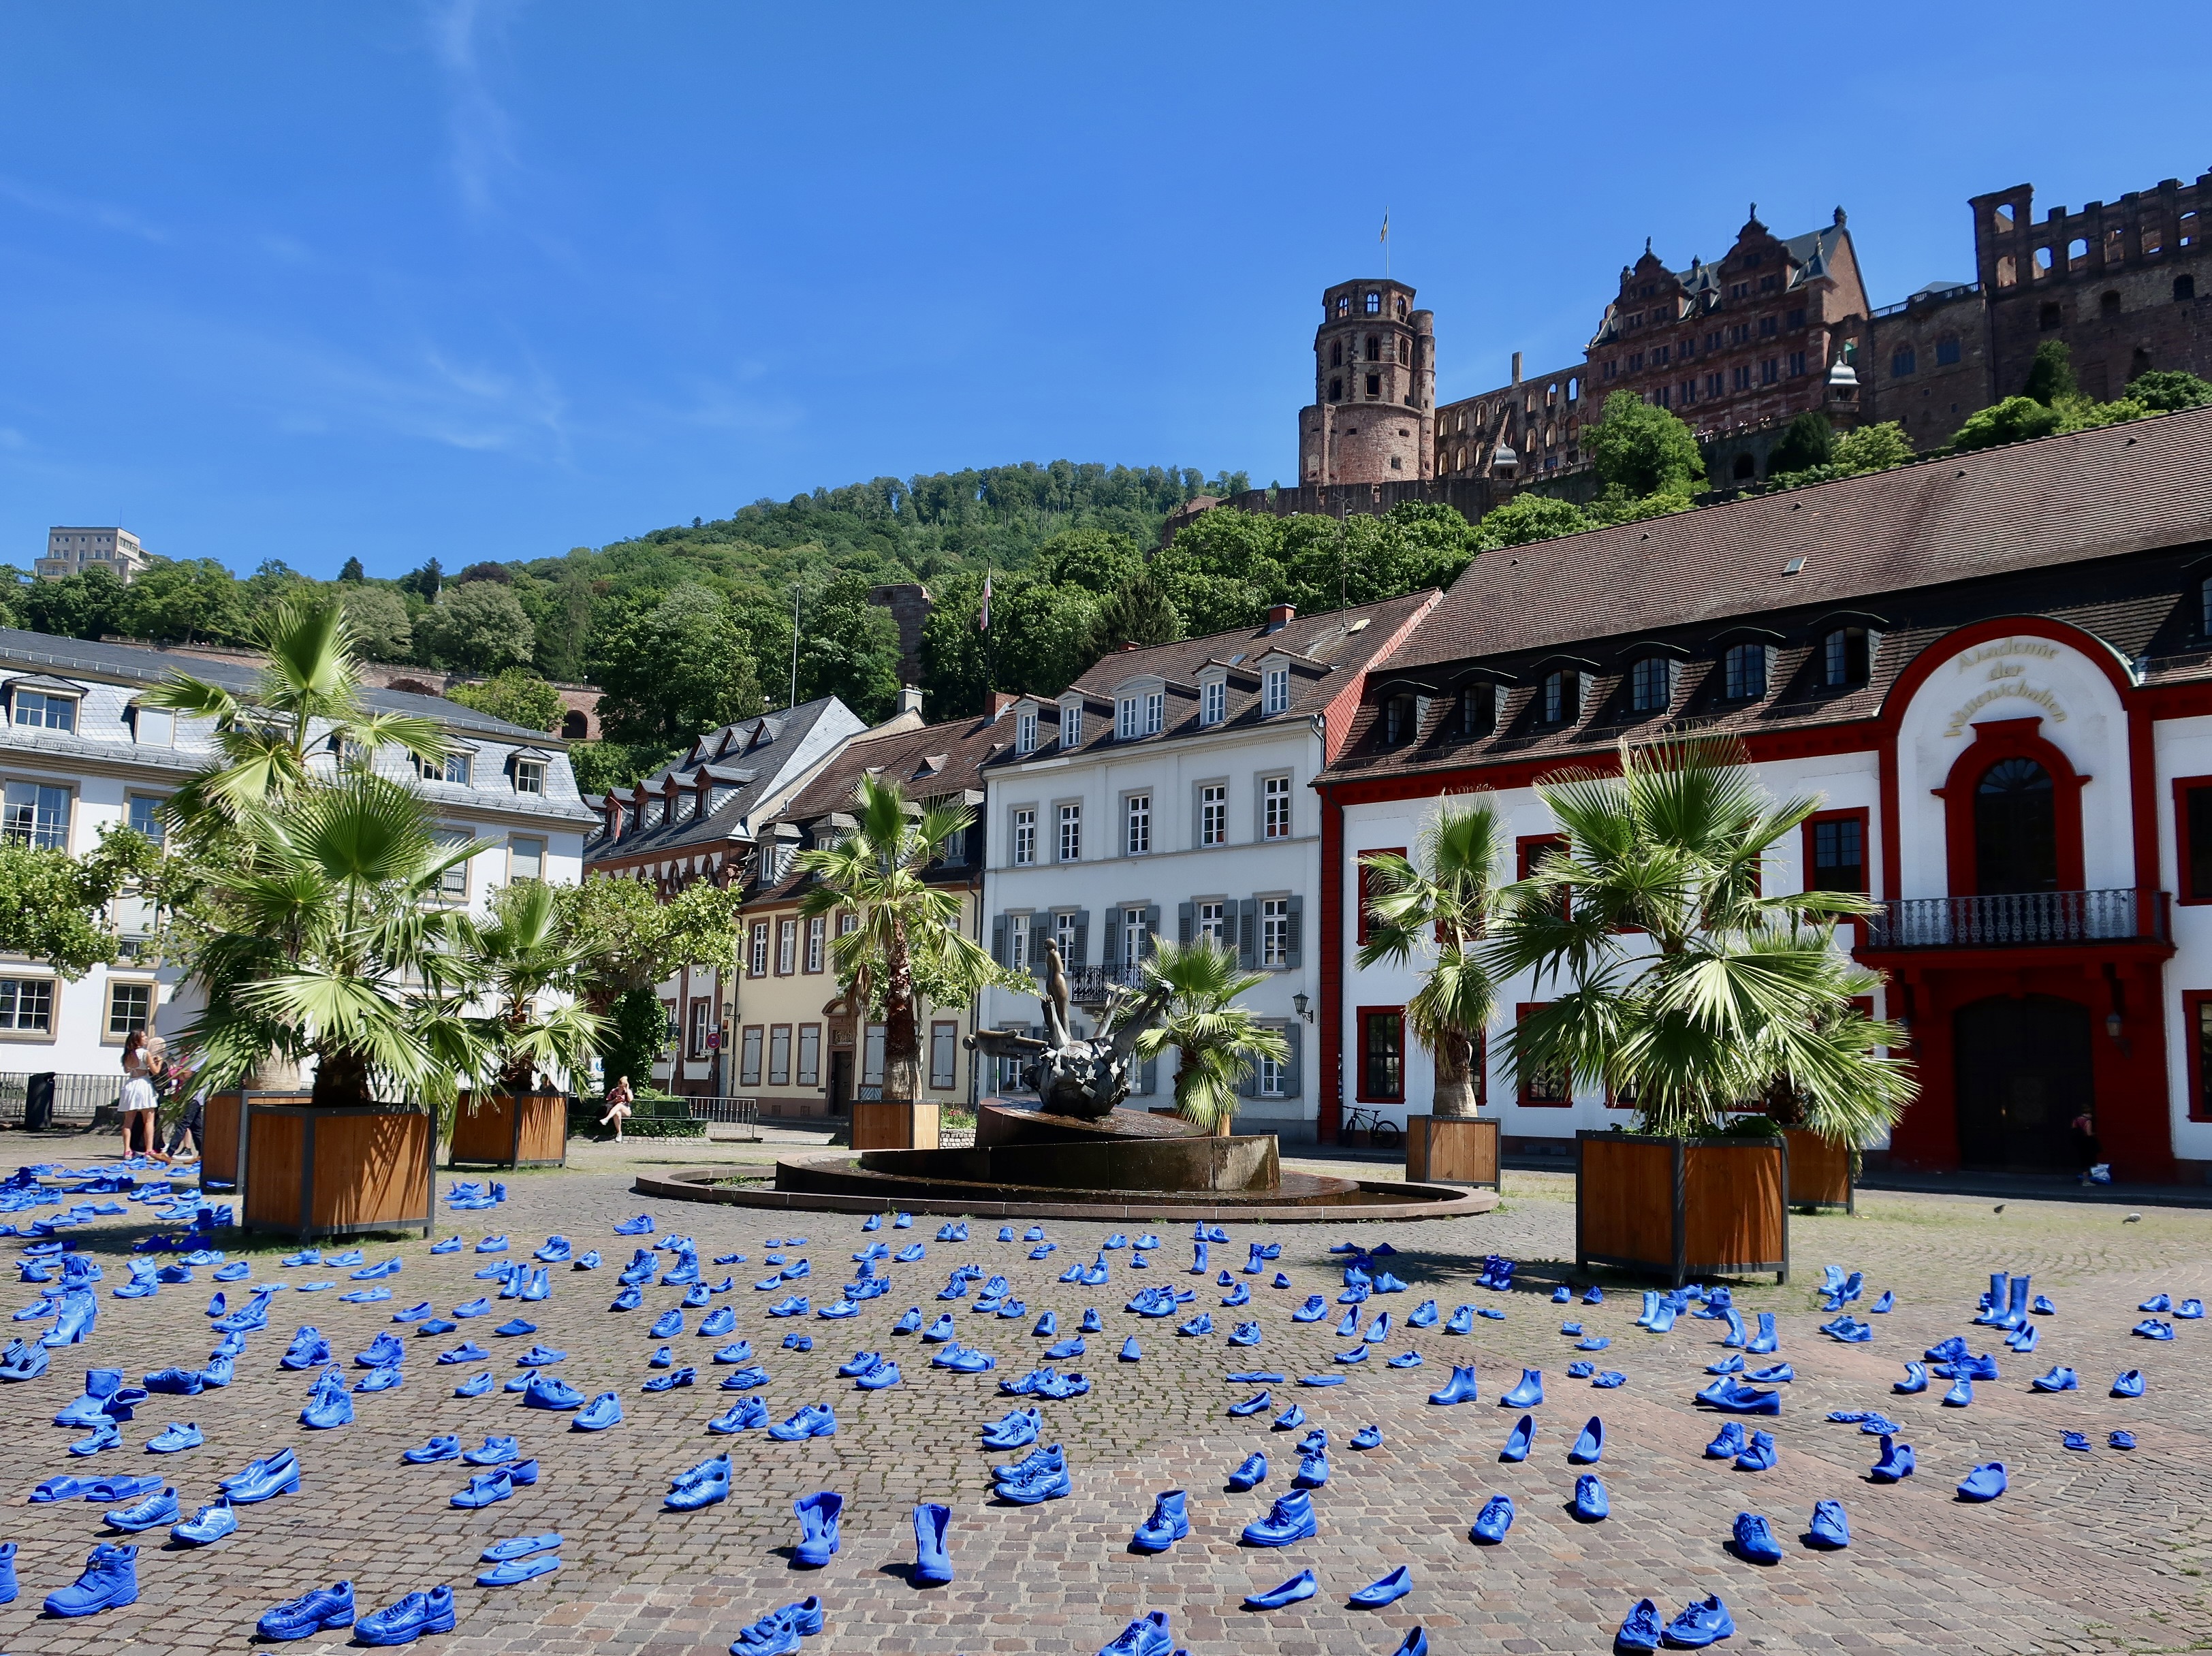 Photos of Heidelberg by Curt and Peggy Mekemson.